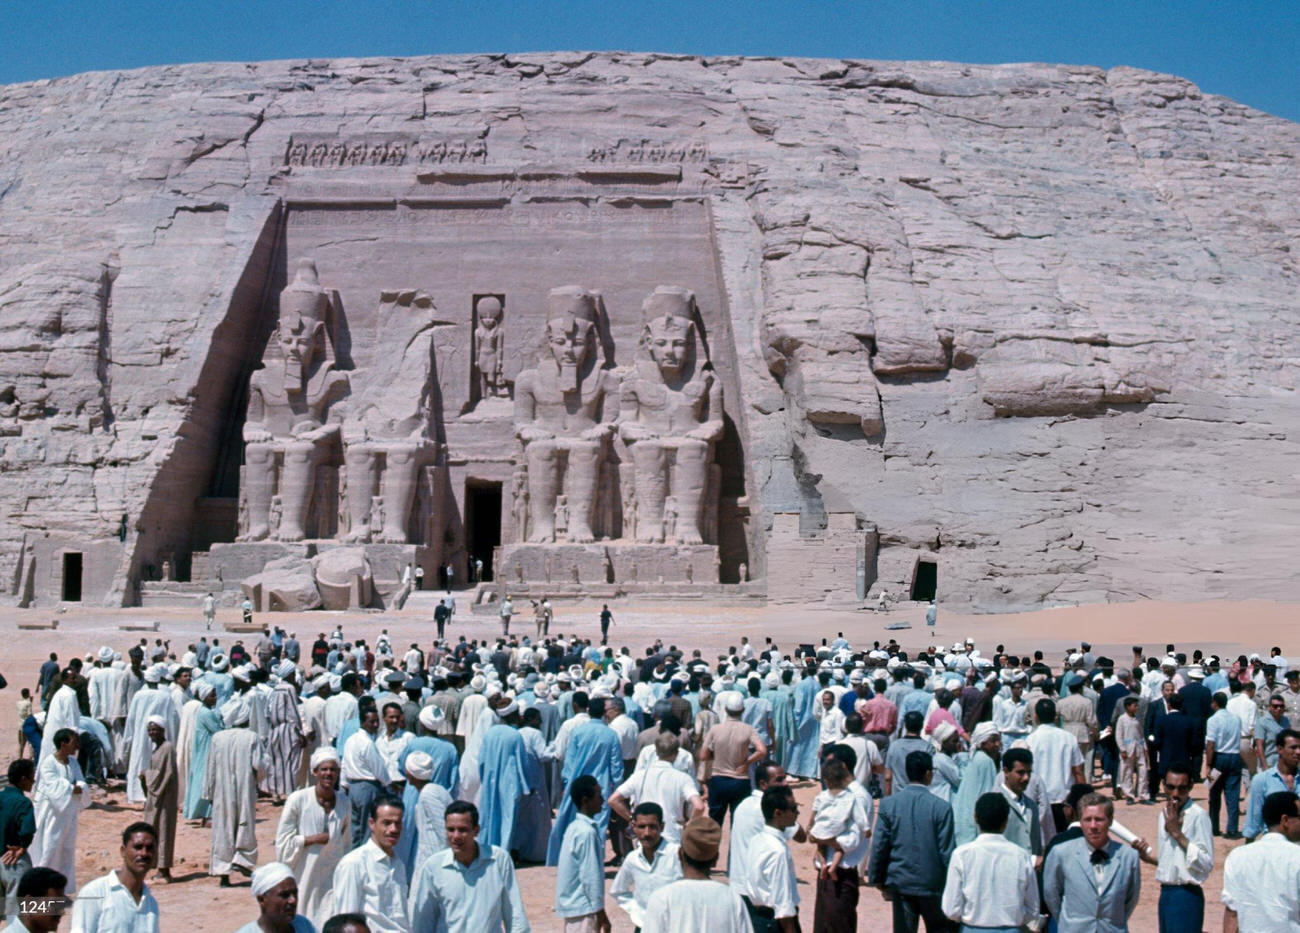 The 1967 celebration of Abu Simbel's temple relocation